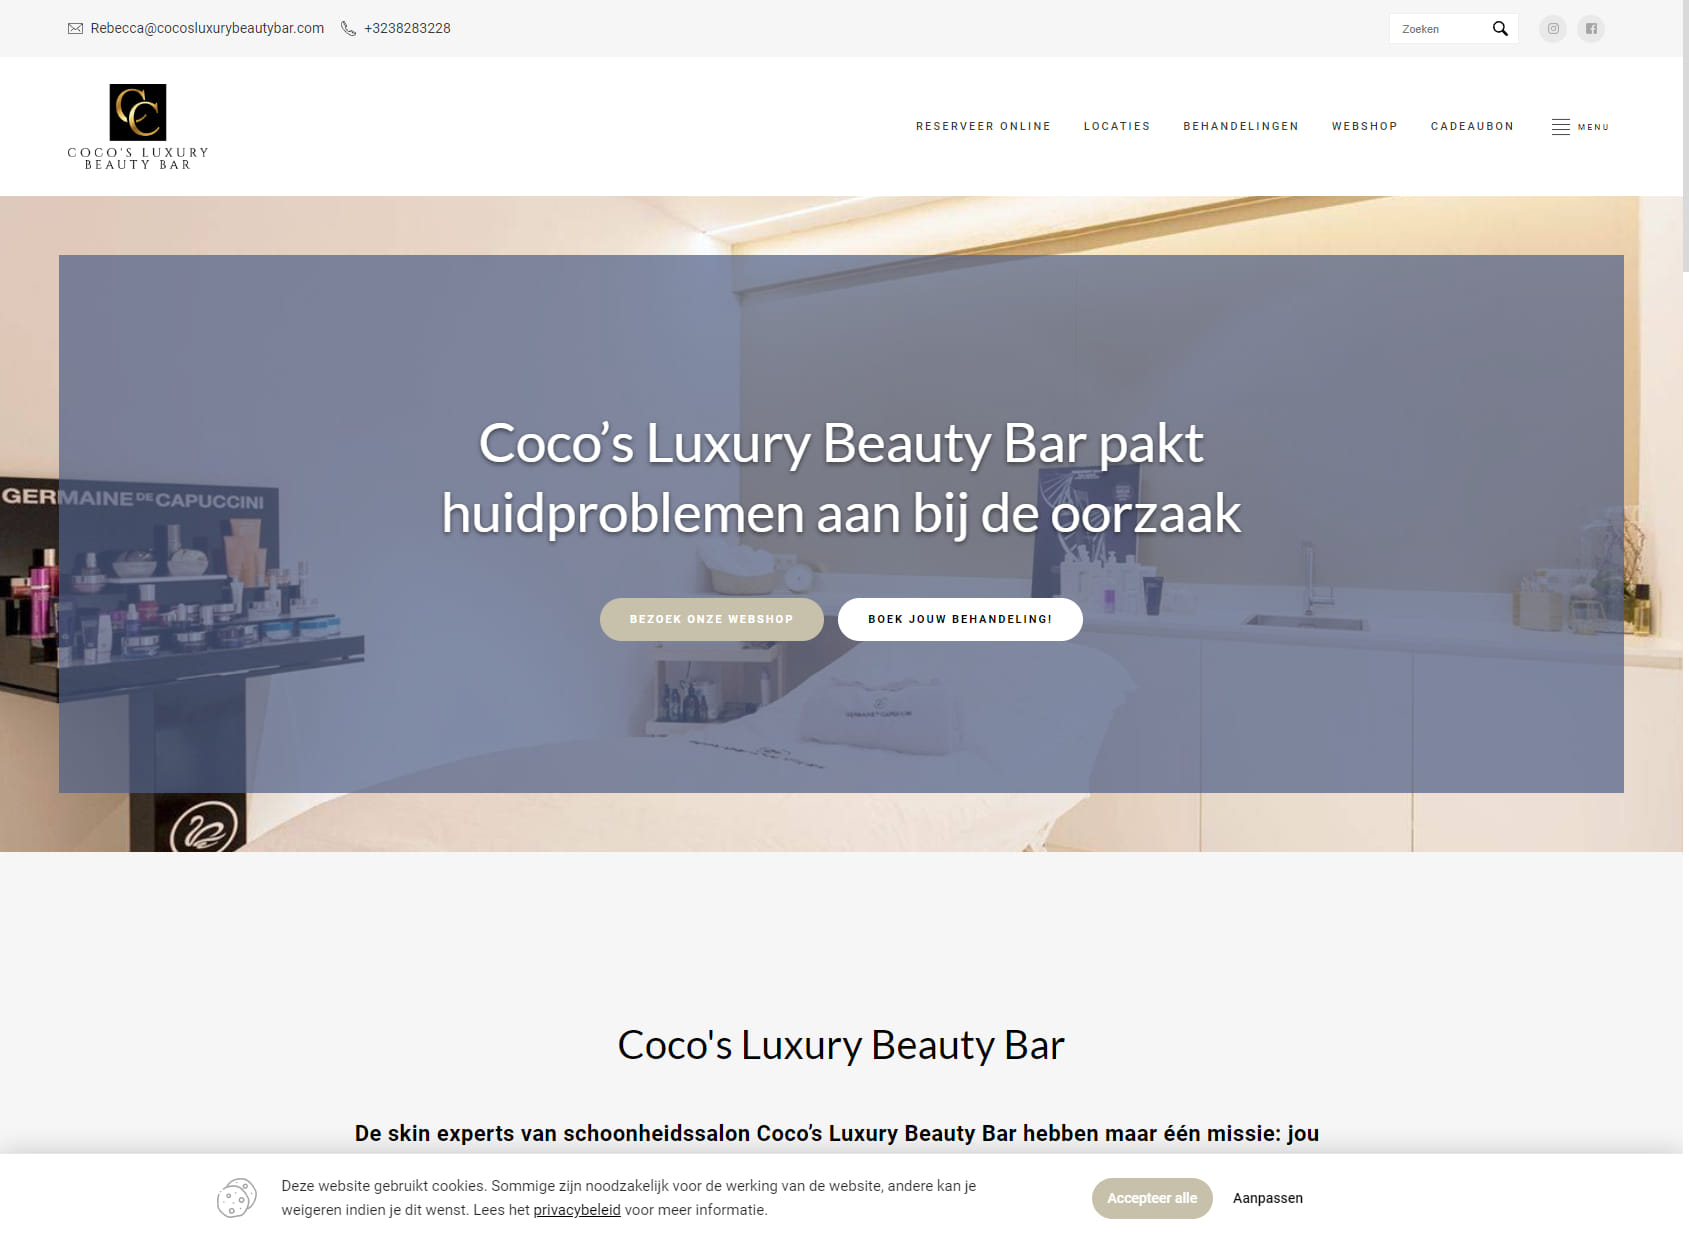 Coco's Luxury Beauty Bar